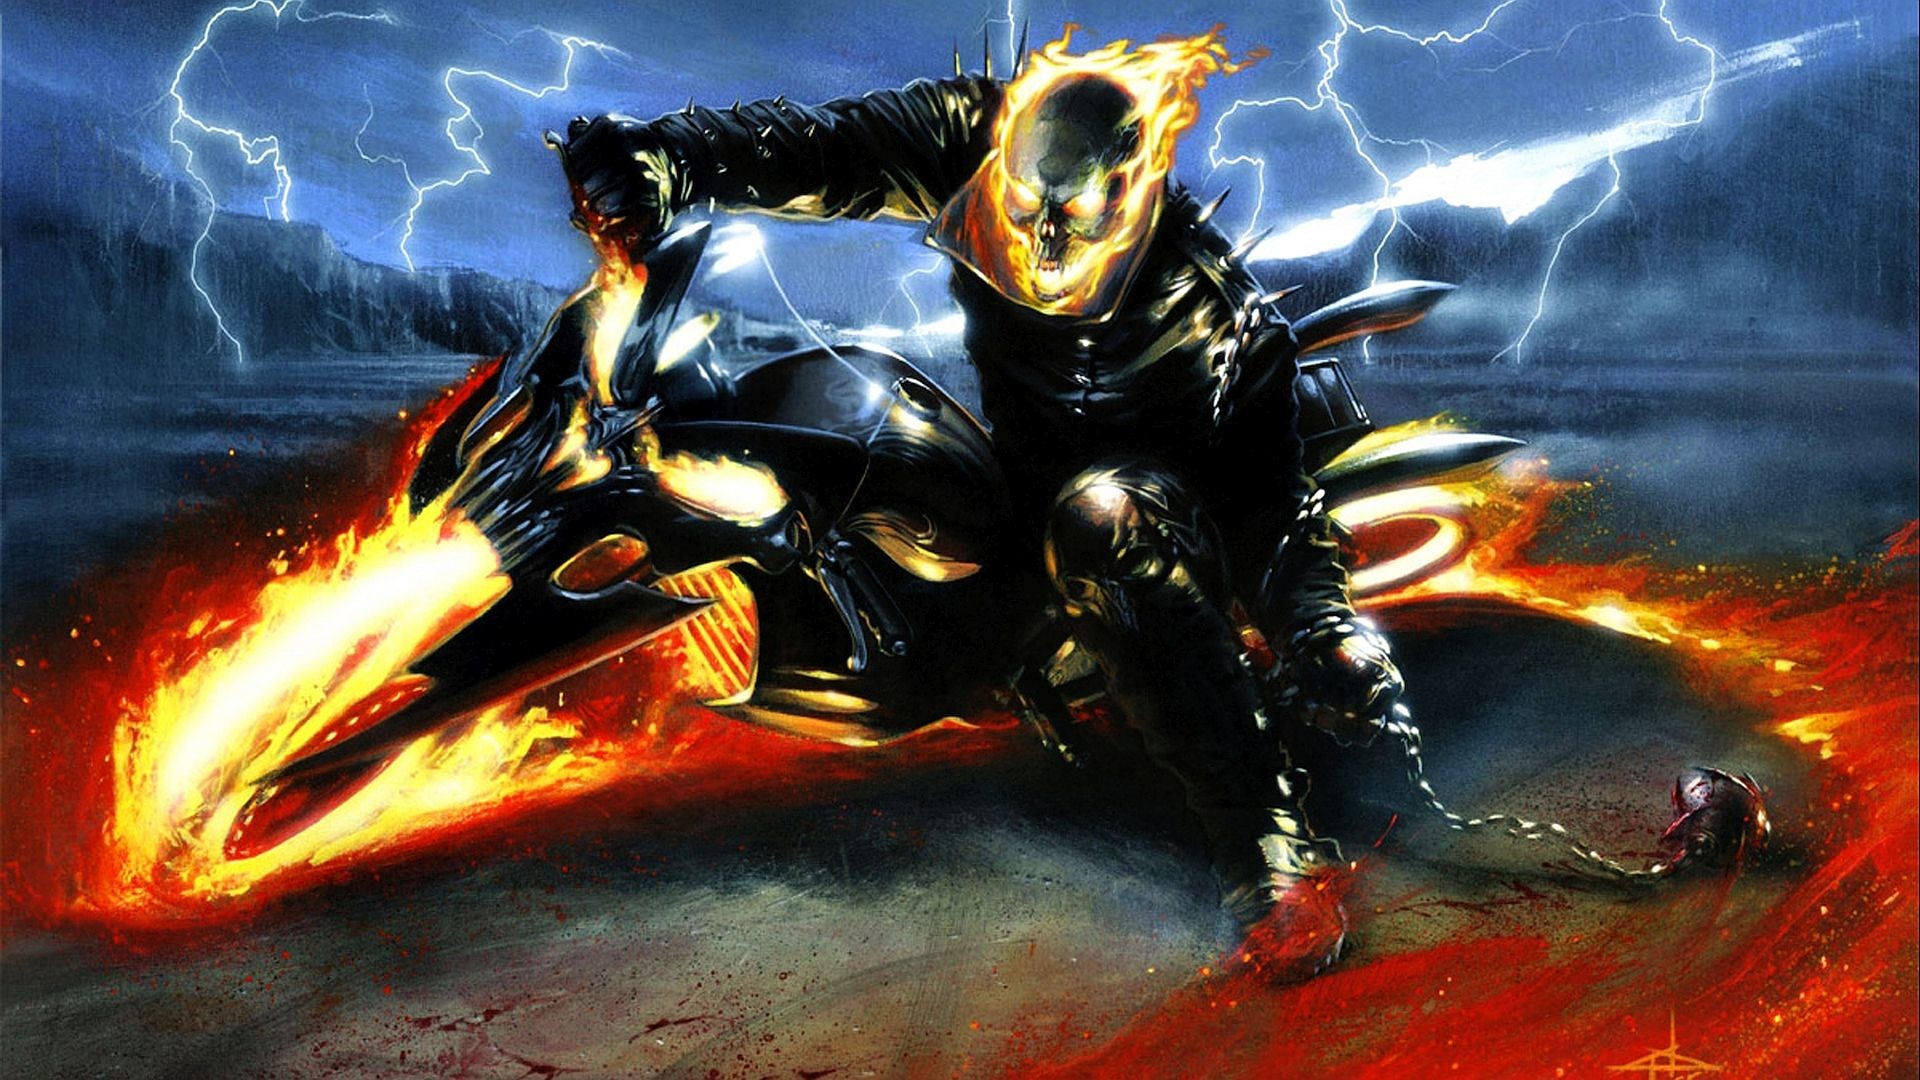 1920x1080 Ghost Rider wallpaper hd free download